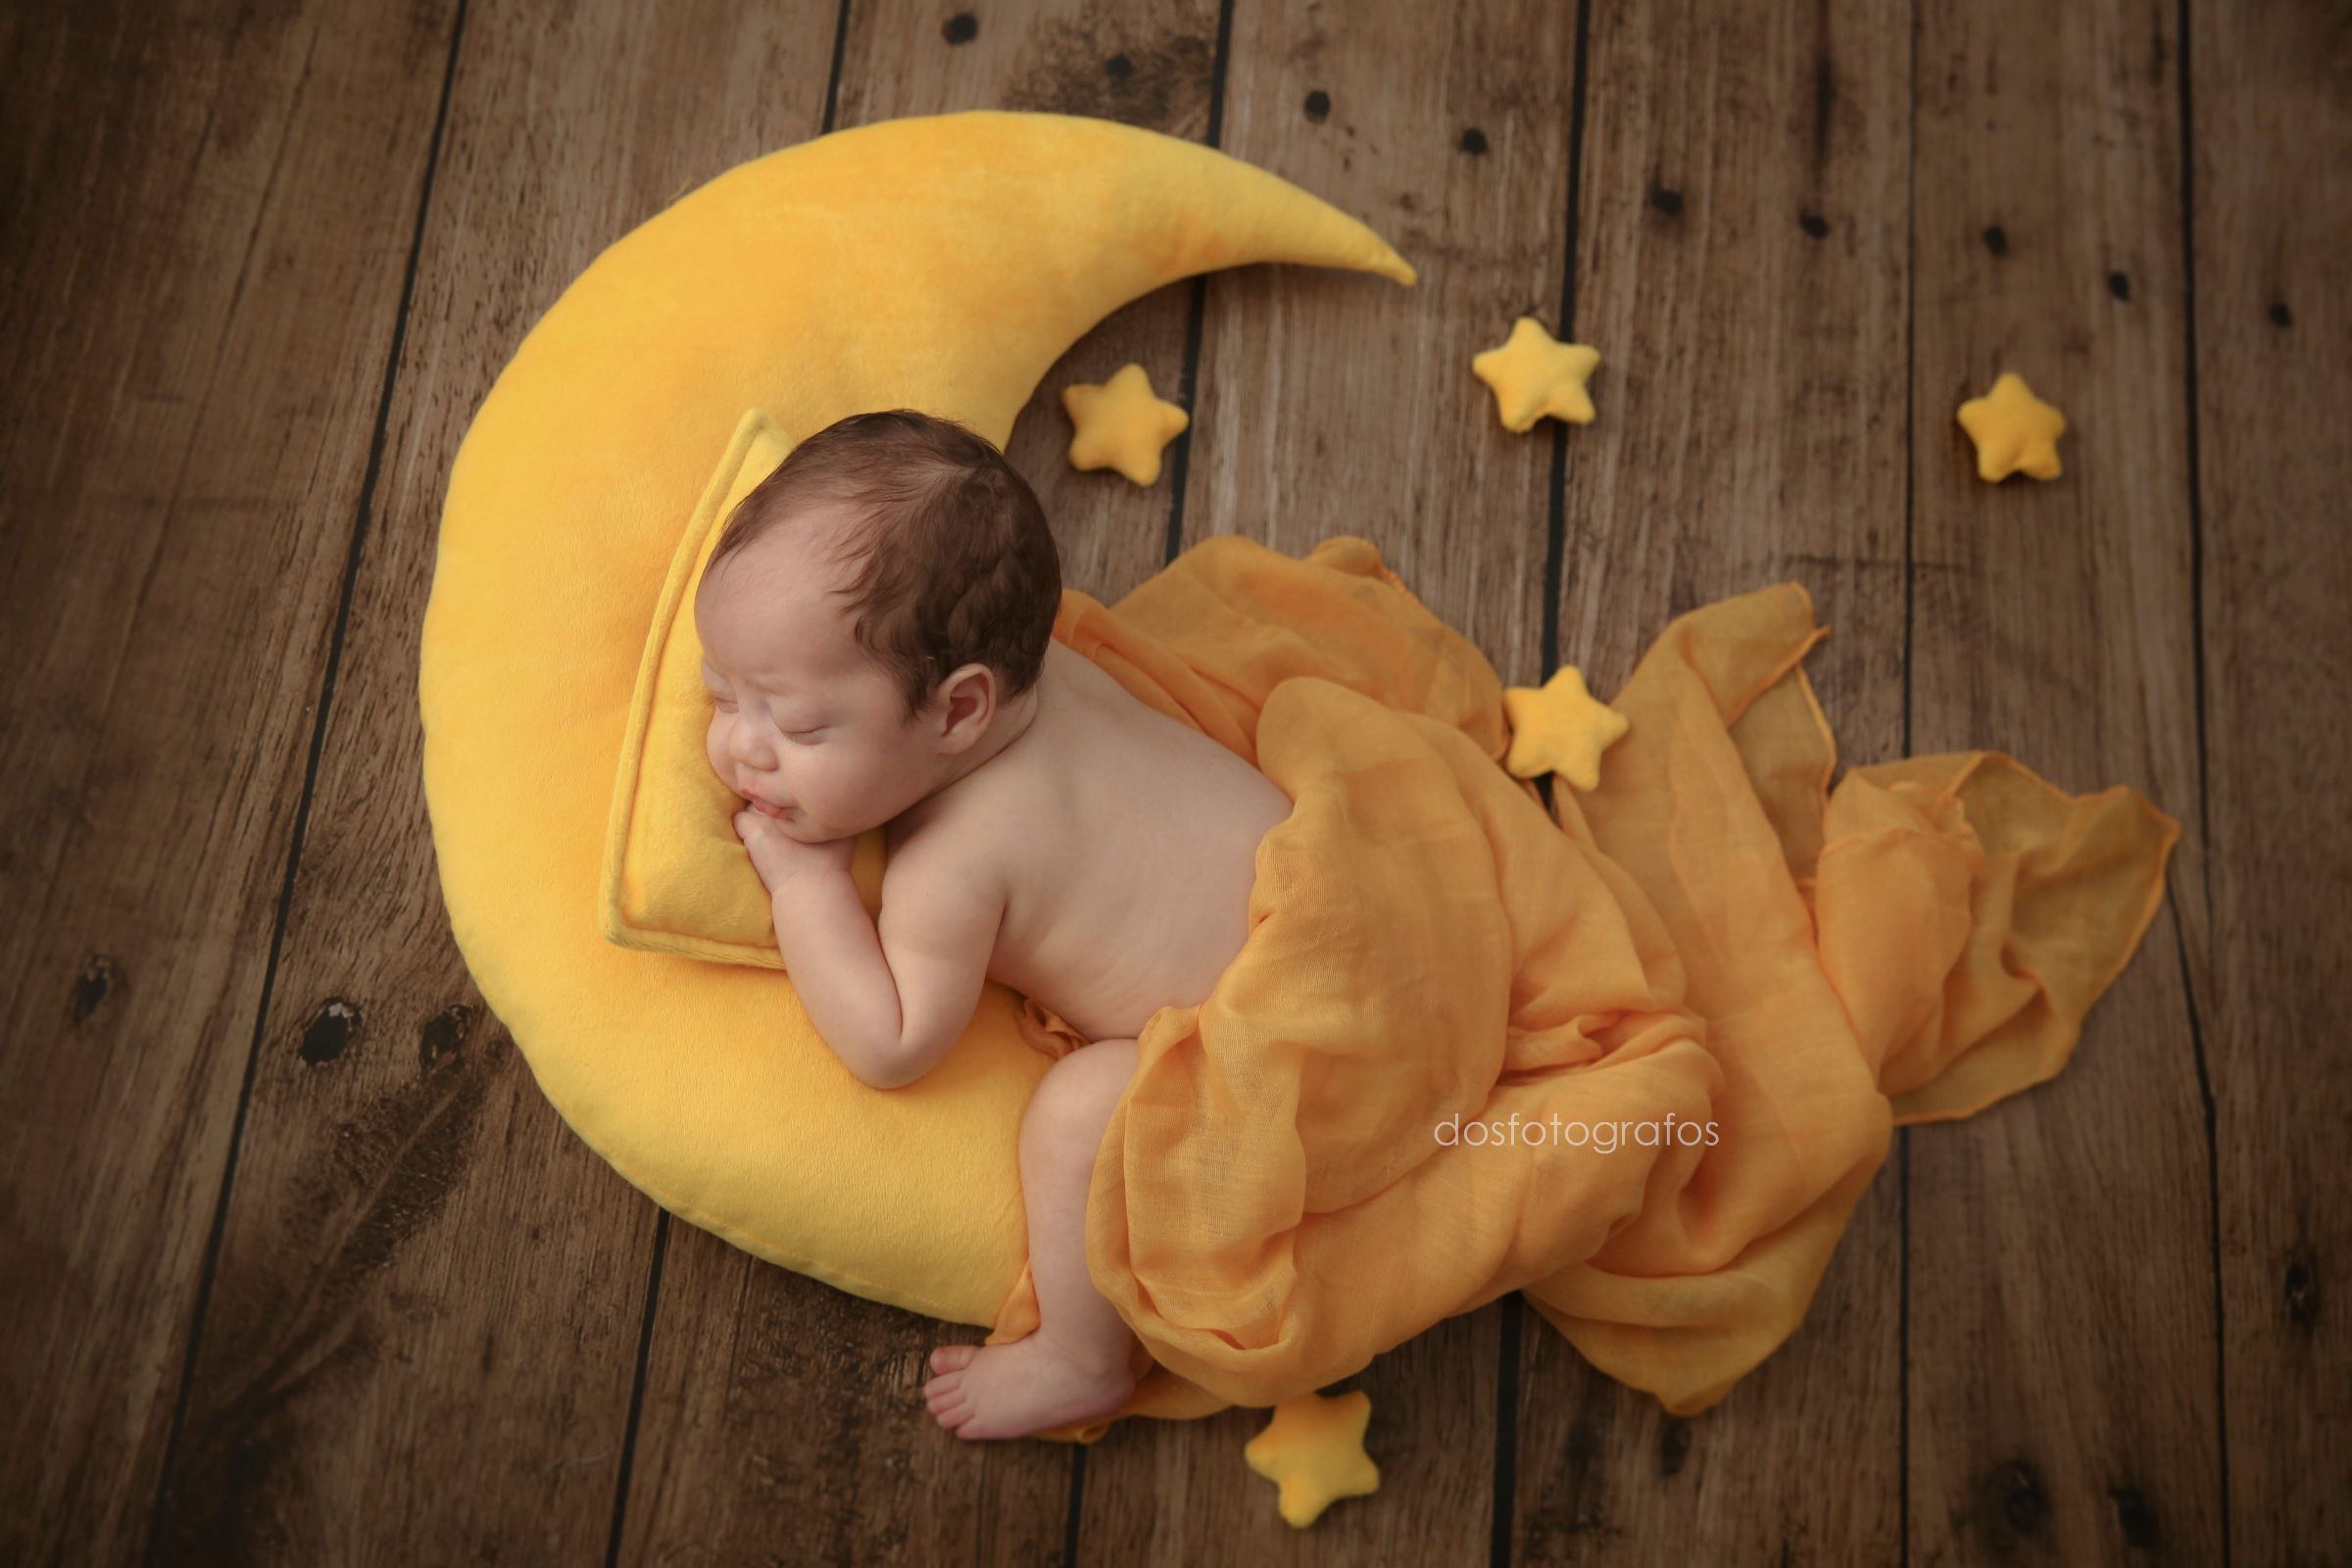 Level 5PCS Multi Farben Crescent Mond-Form-Nylongarn Kissen-Set für Neugeborene Baby-Kind-Foto Props 